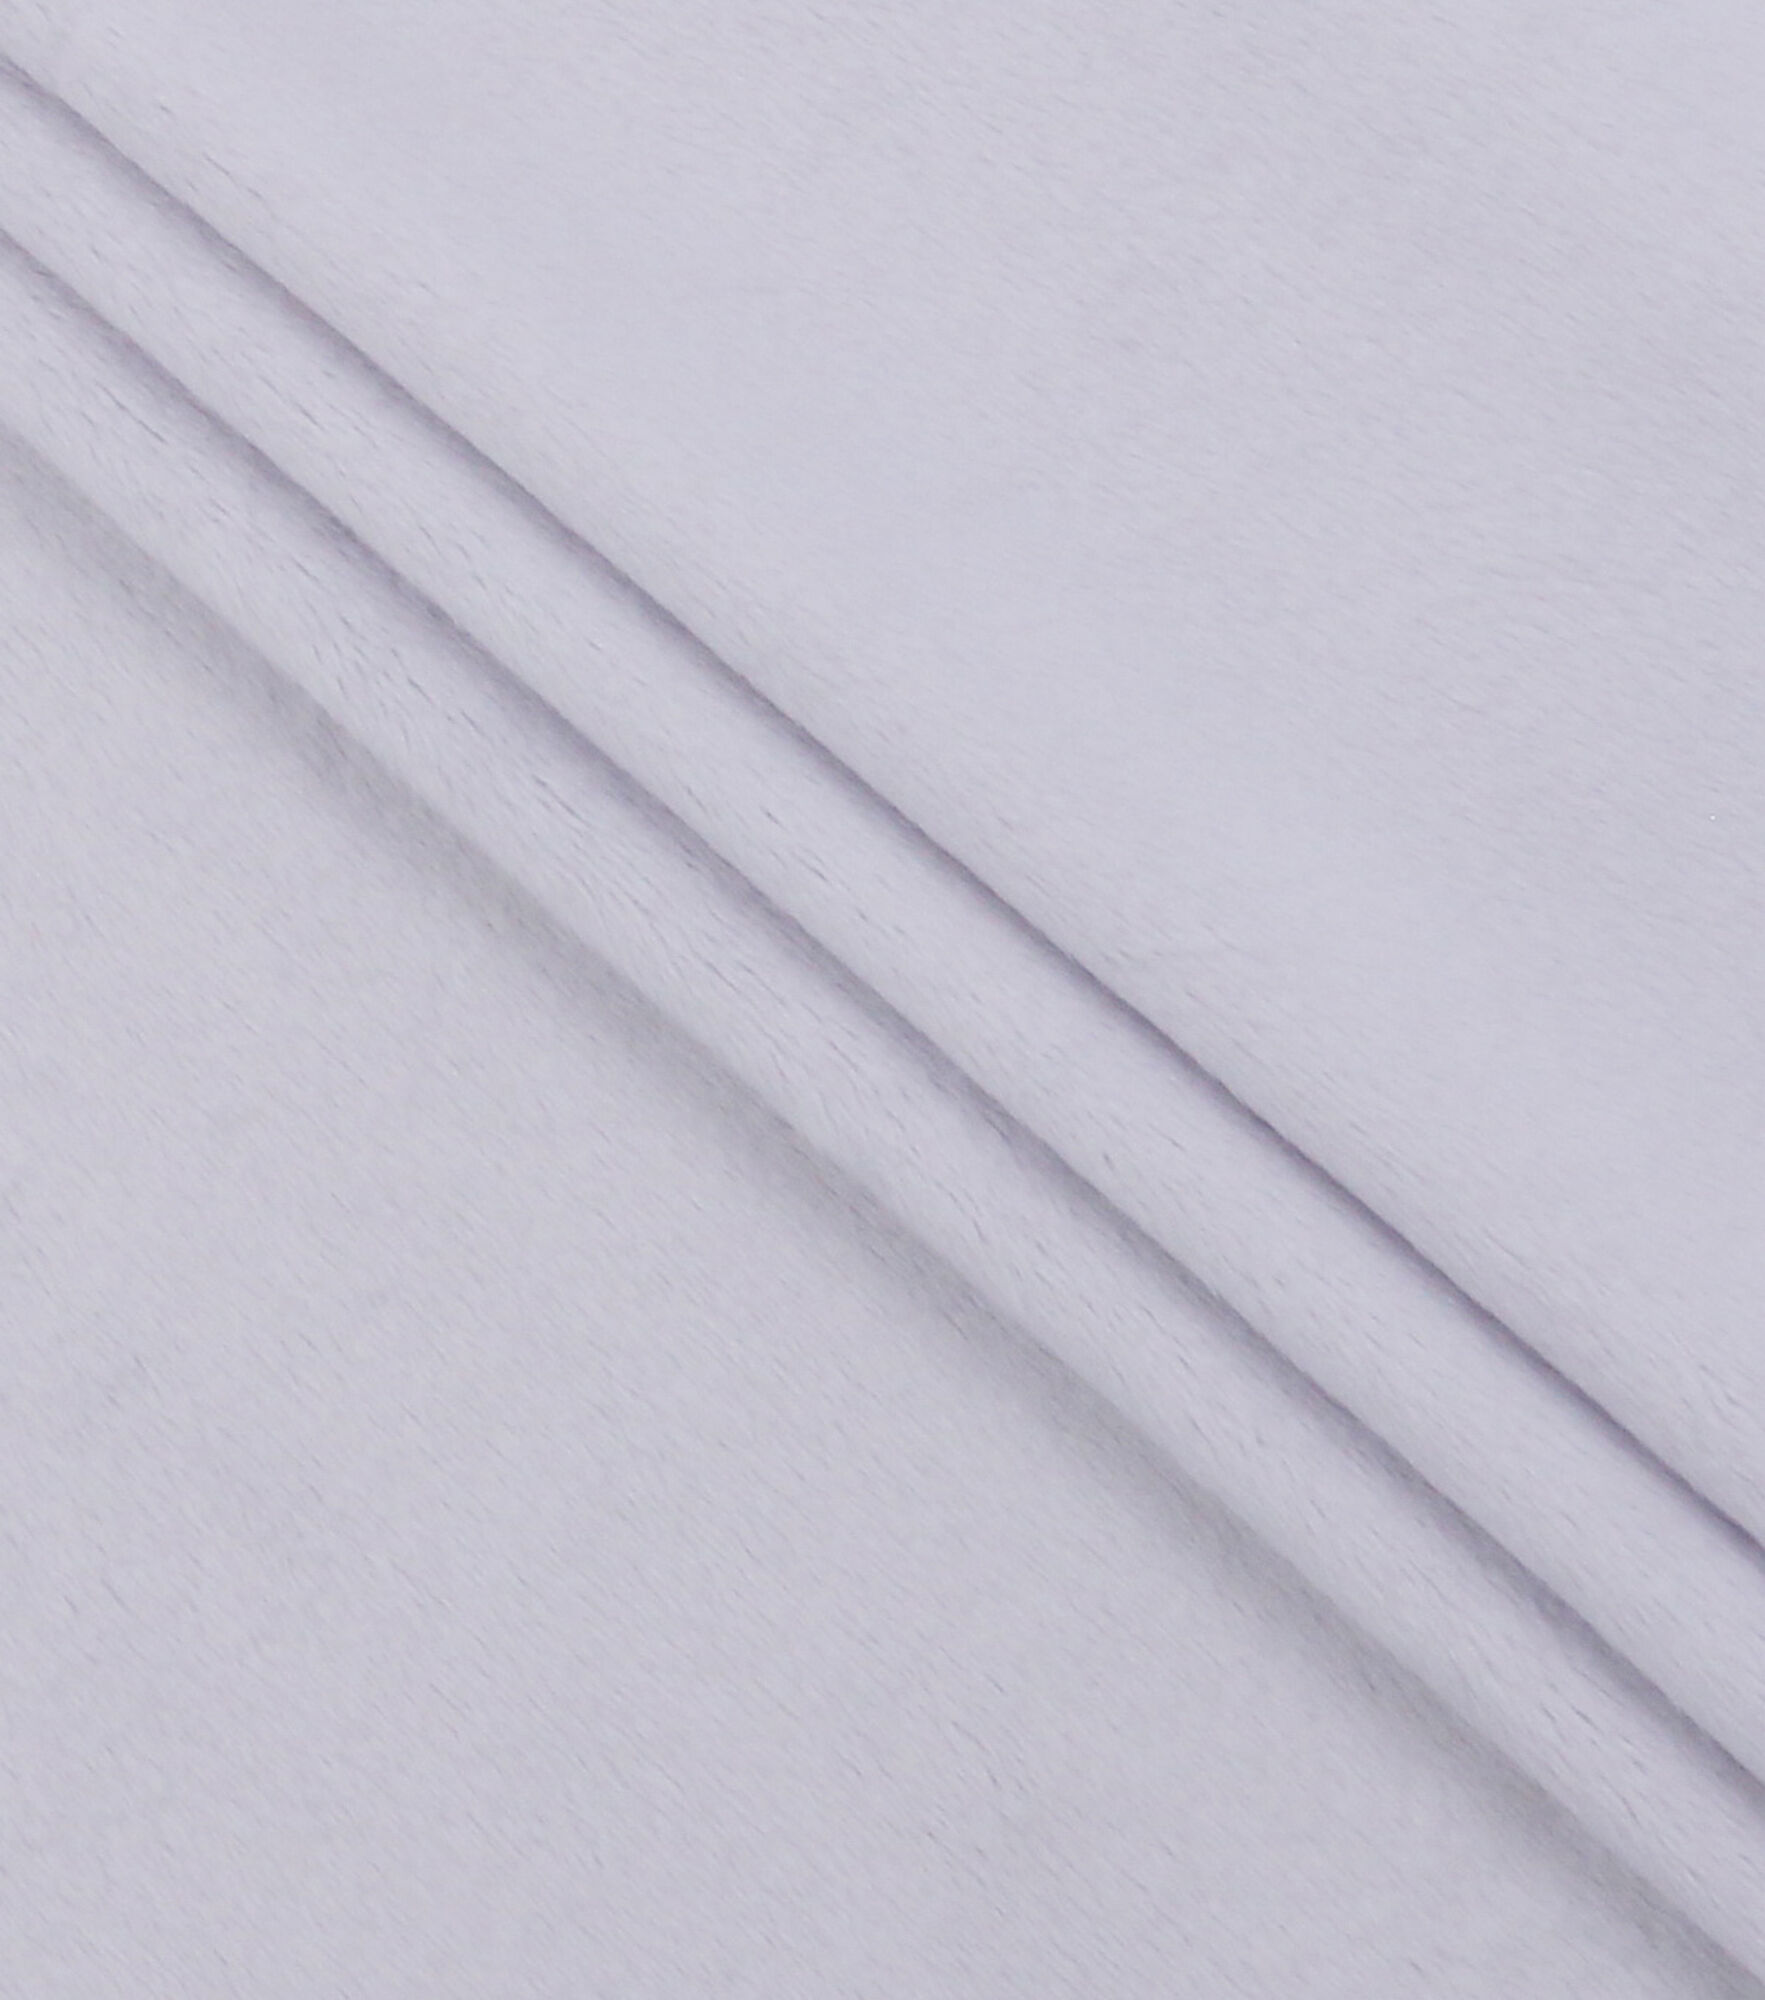 Soft & Minky Fleece Fabric Solids